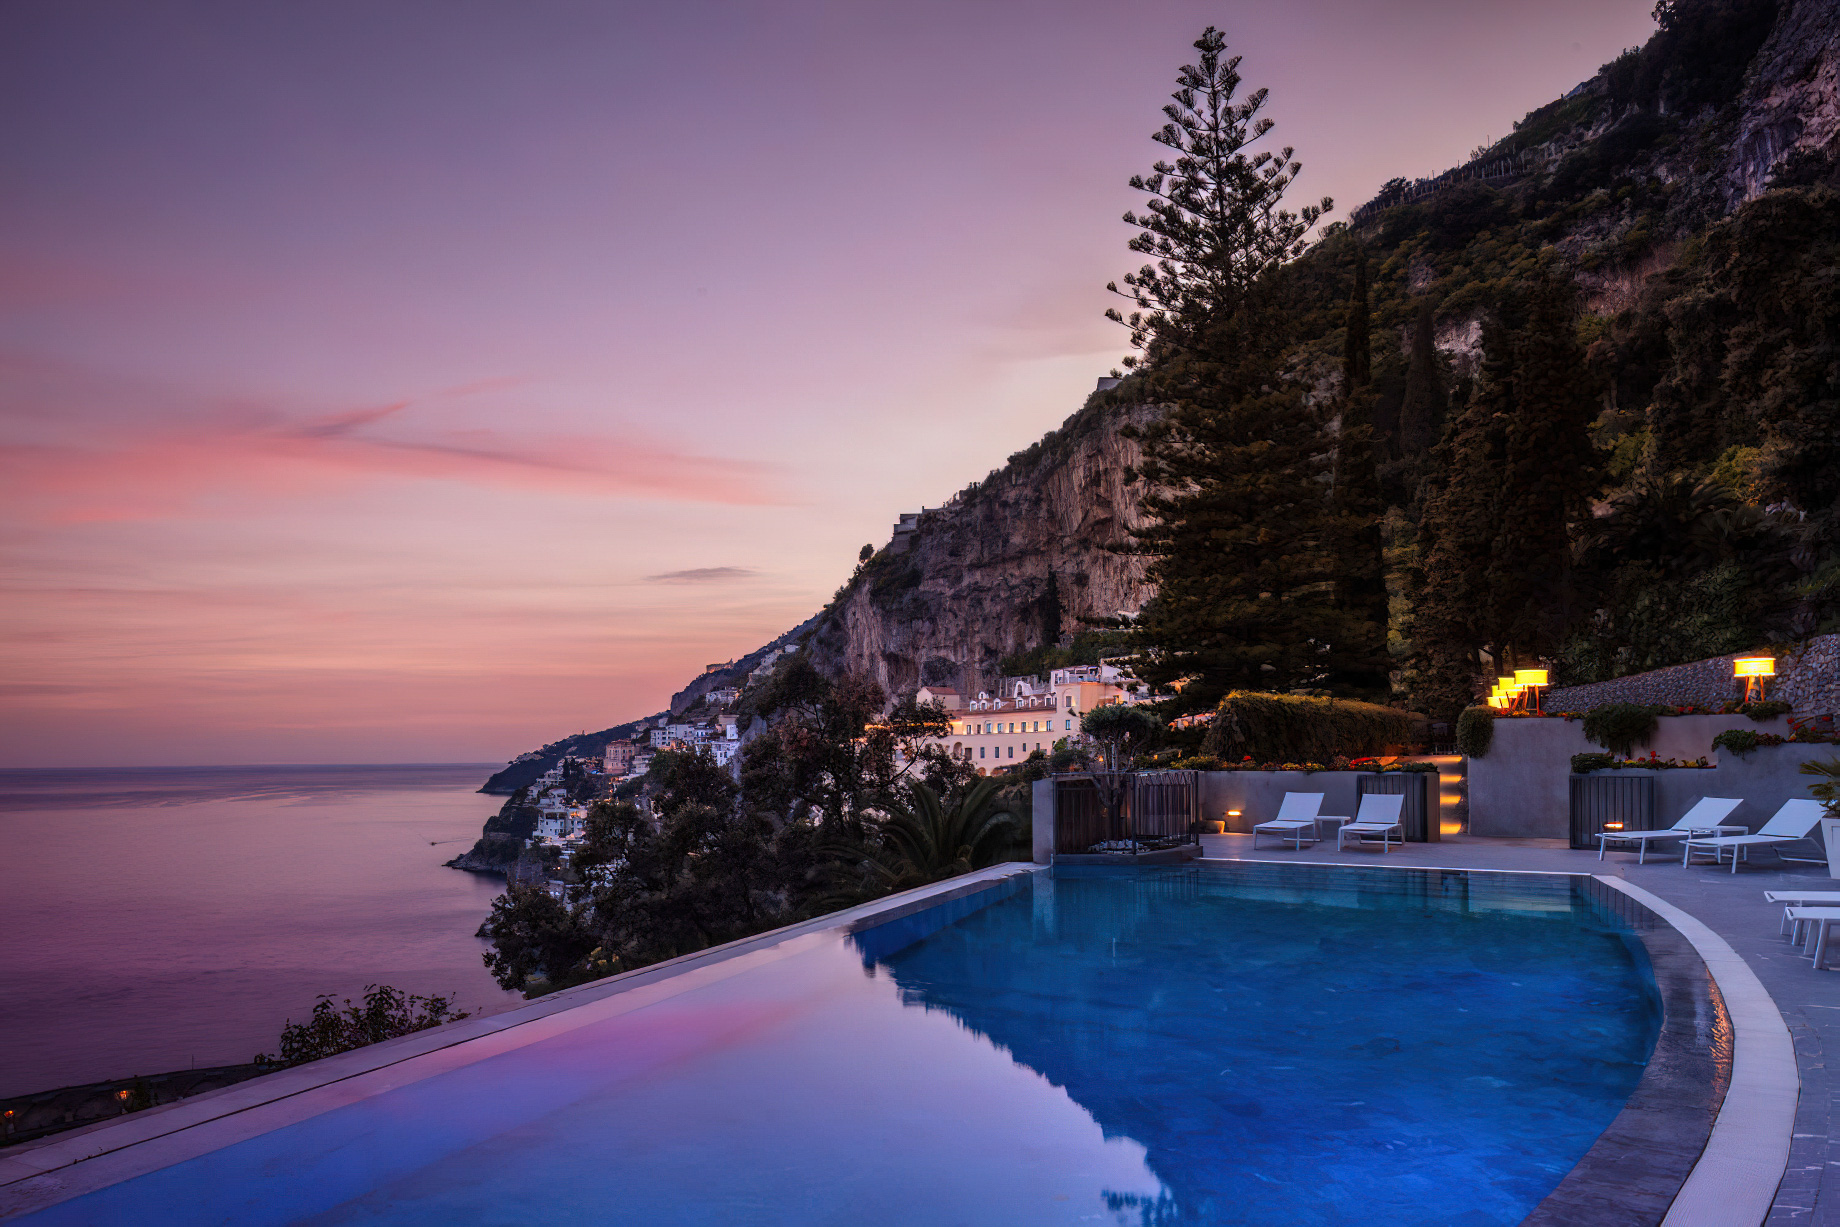 Anantara Convento Di Amalfi Grand Hotel - Italy - Pool Sunset View